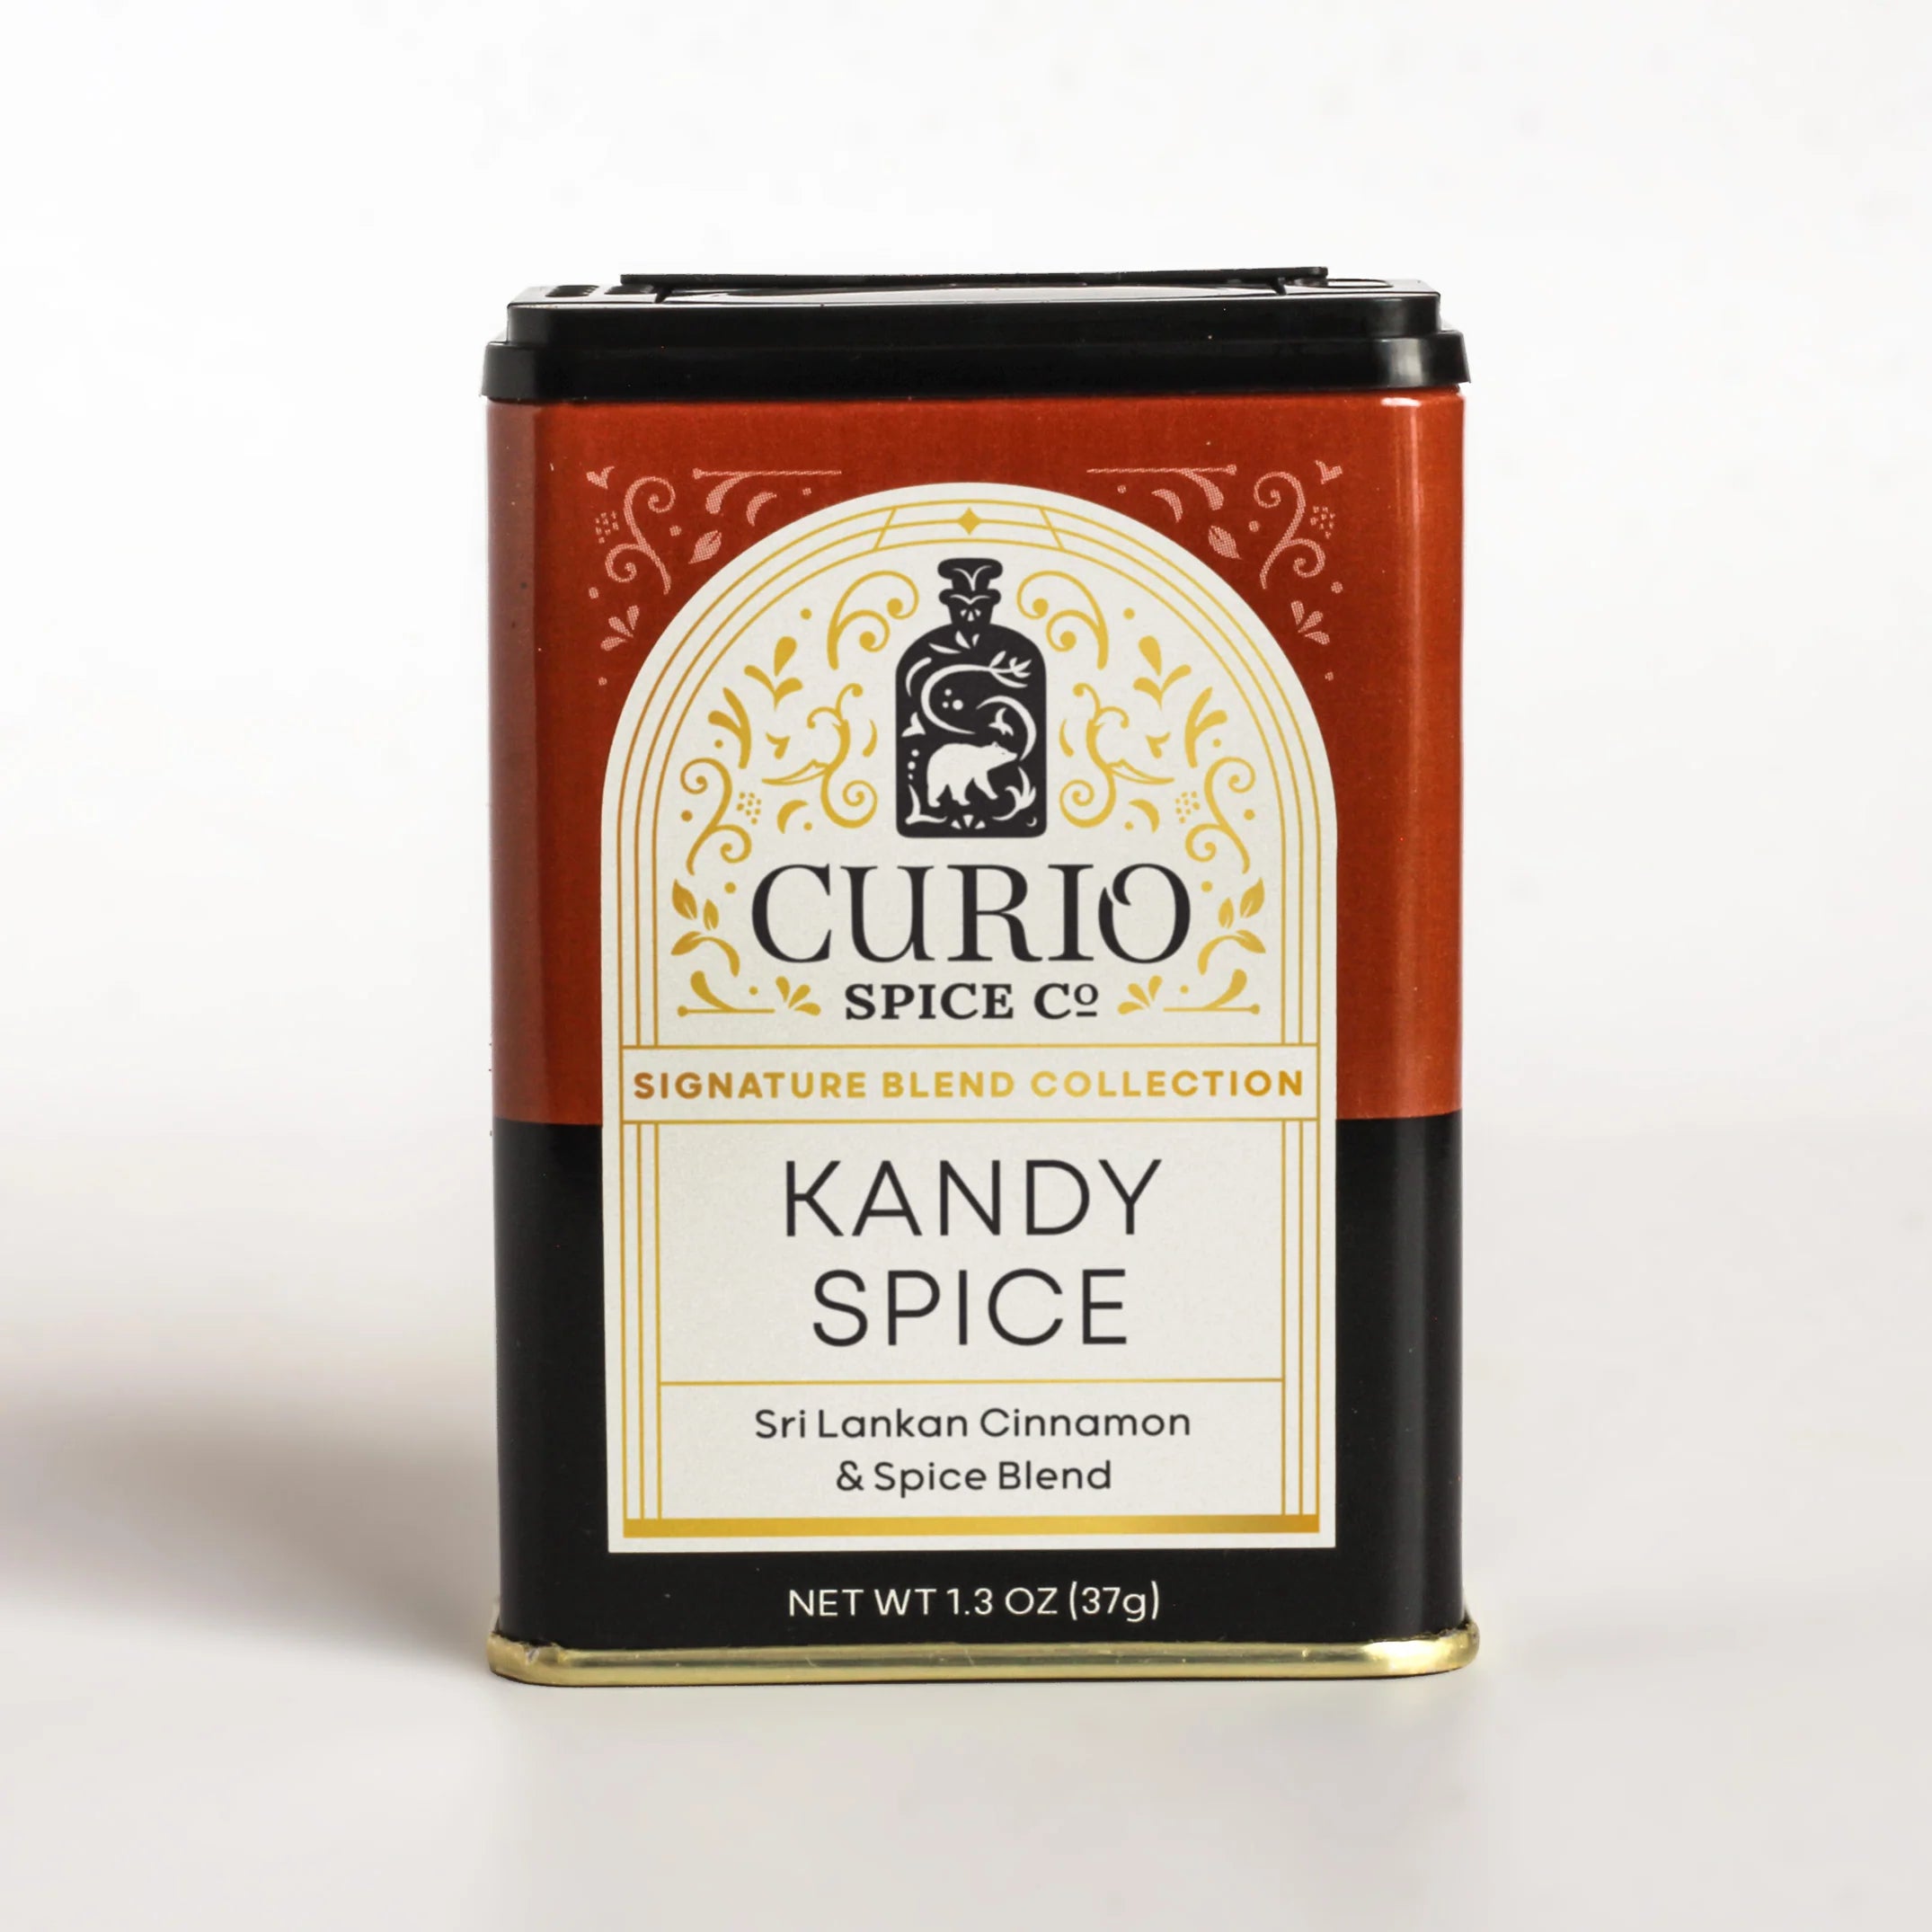 Curio Spice Co Kandy Spice- Olive Oil Etcetera